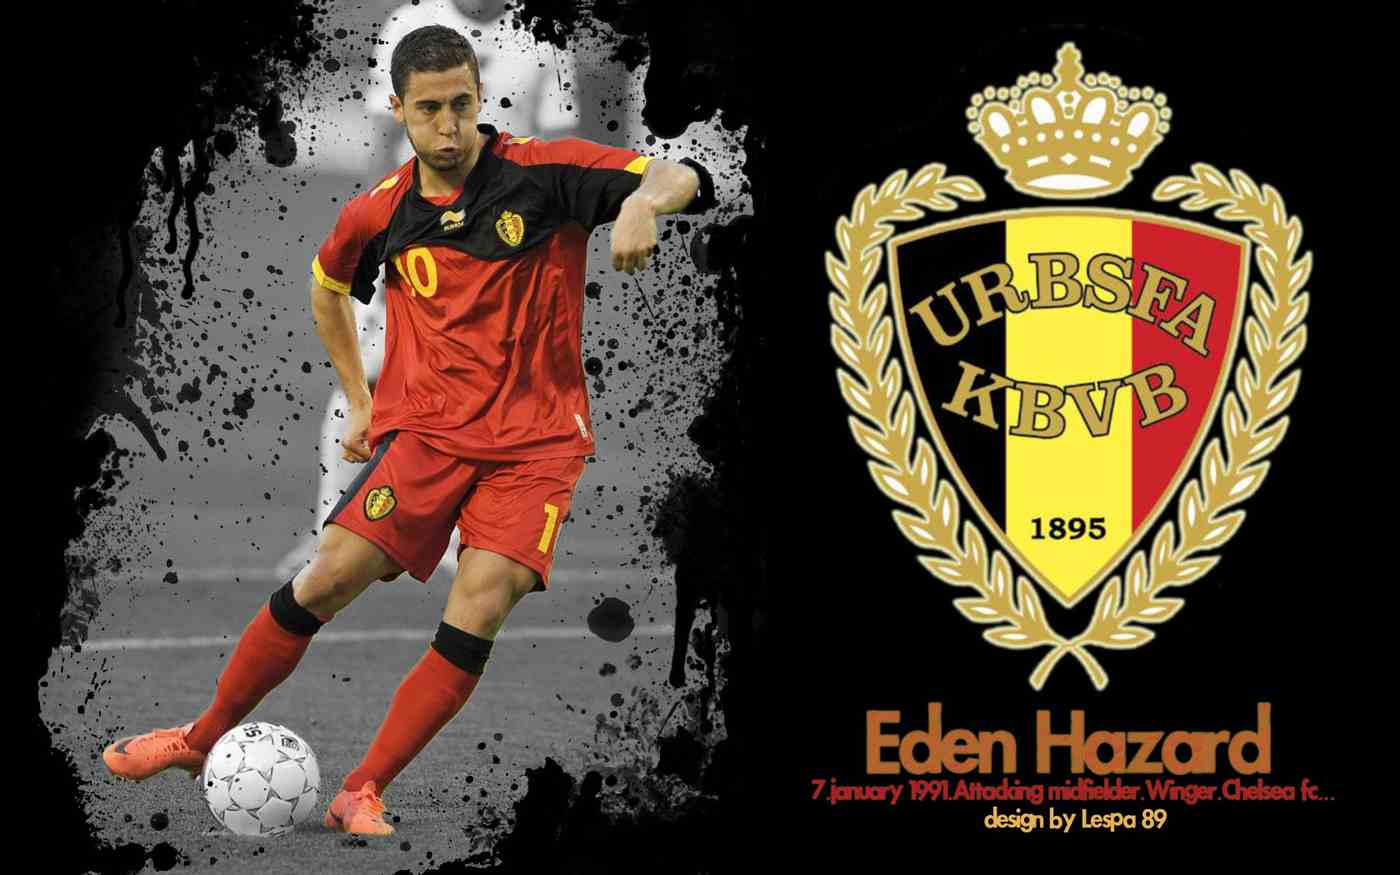 Eden Hazard Football Wallpaper, Background and Picture